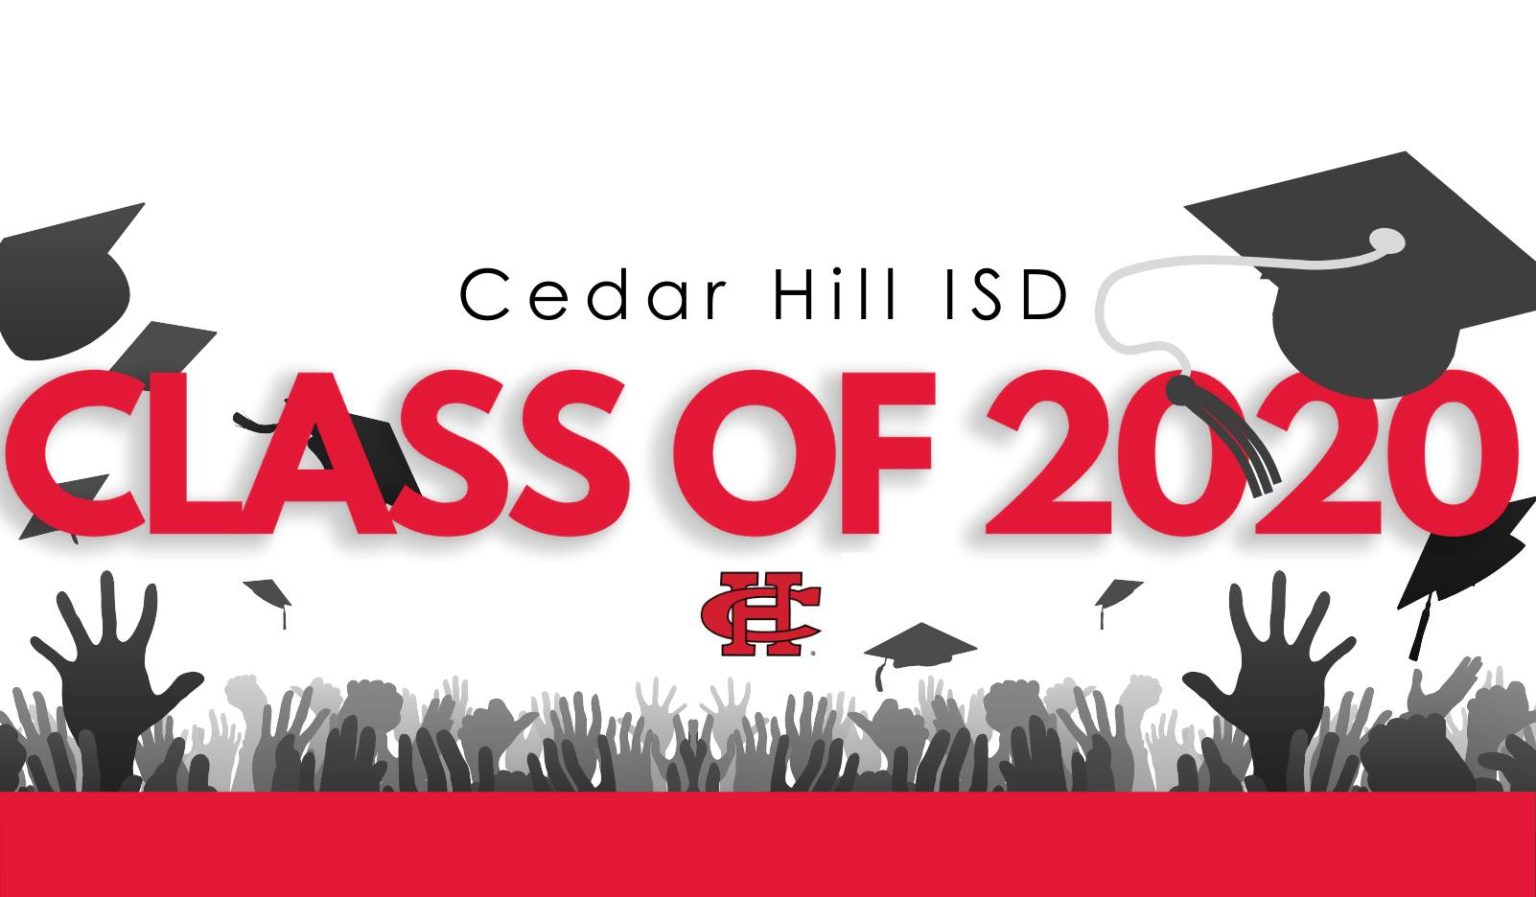 Cedar Hill ISD Announces Graduation At Texas Motorplex In Ennis